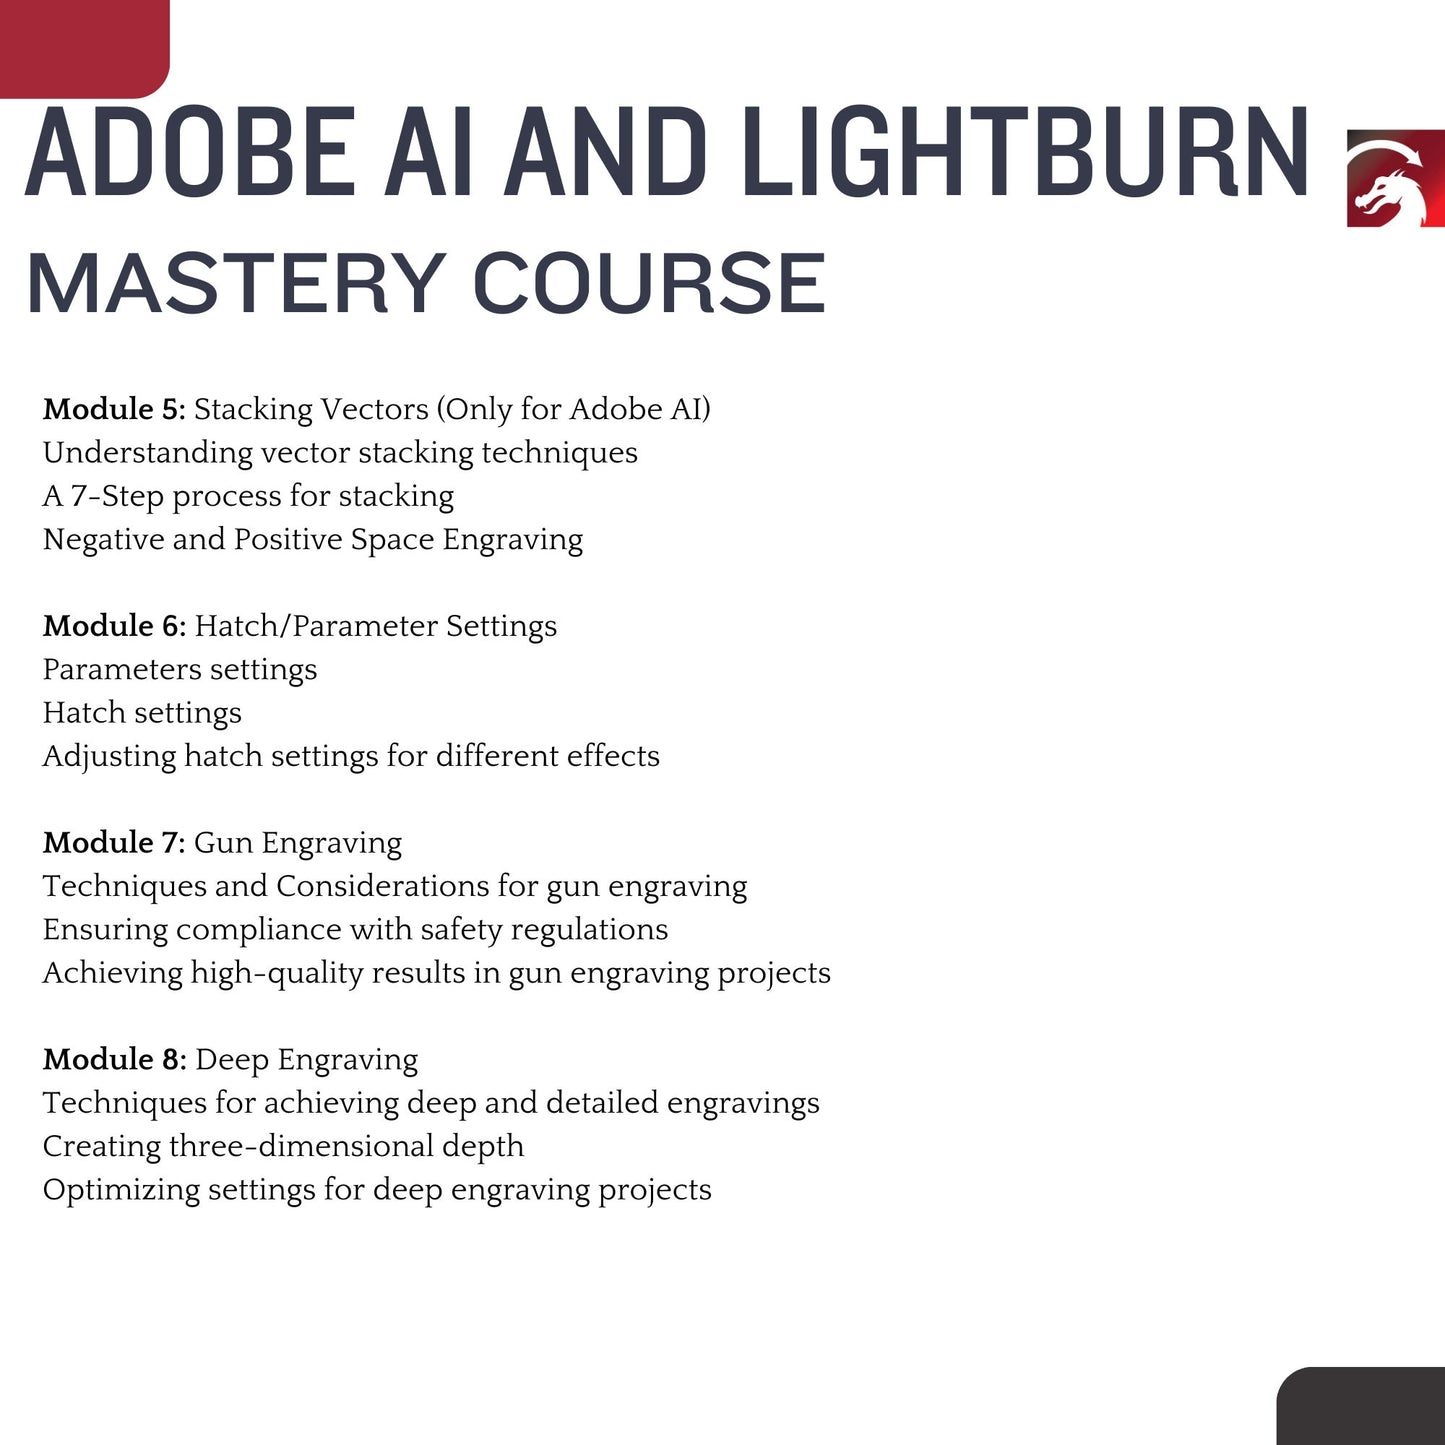 Adobe AI and Lightburn Mastery Course